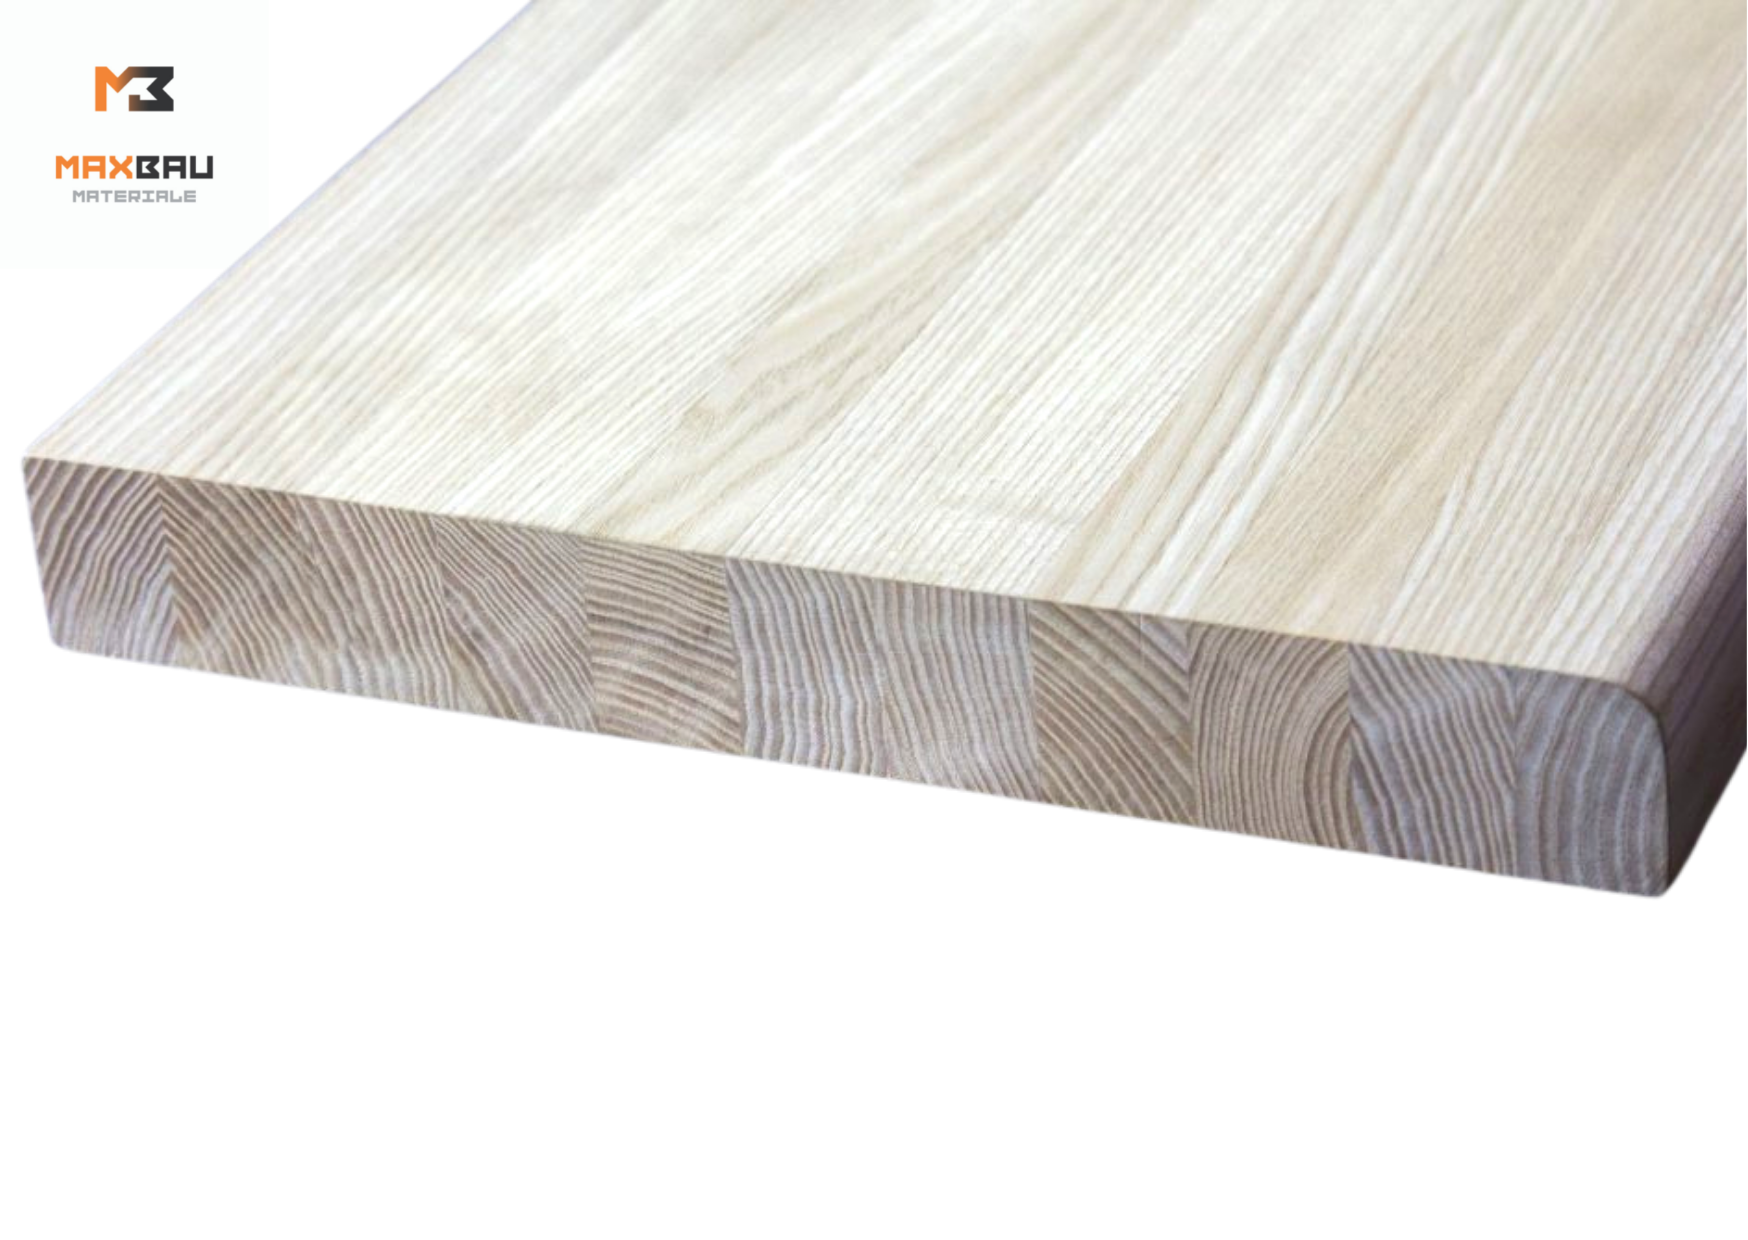 Placi din lemn incleiat - Placa de lemn incleiat MaxBau 800 x 300 x 28 mm Clasa AB, maxbau.ro